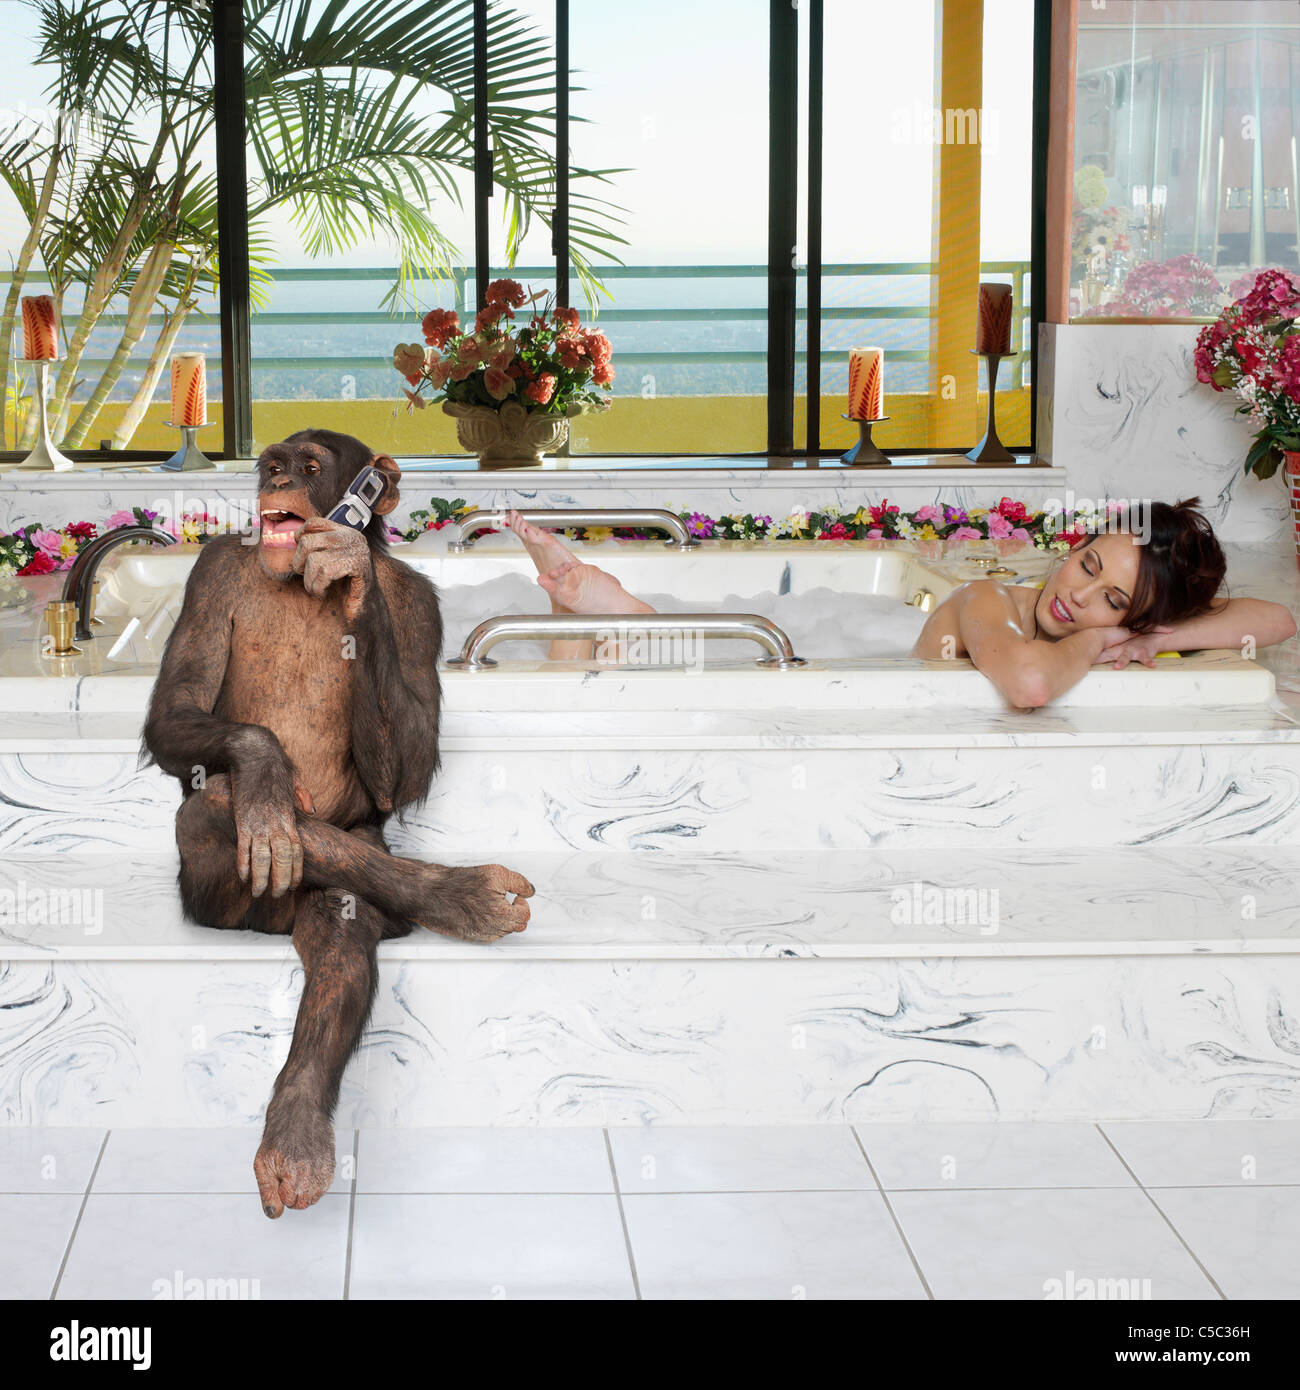 Monkey talking on cell phone while woman takes a bath Stock Photo